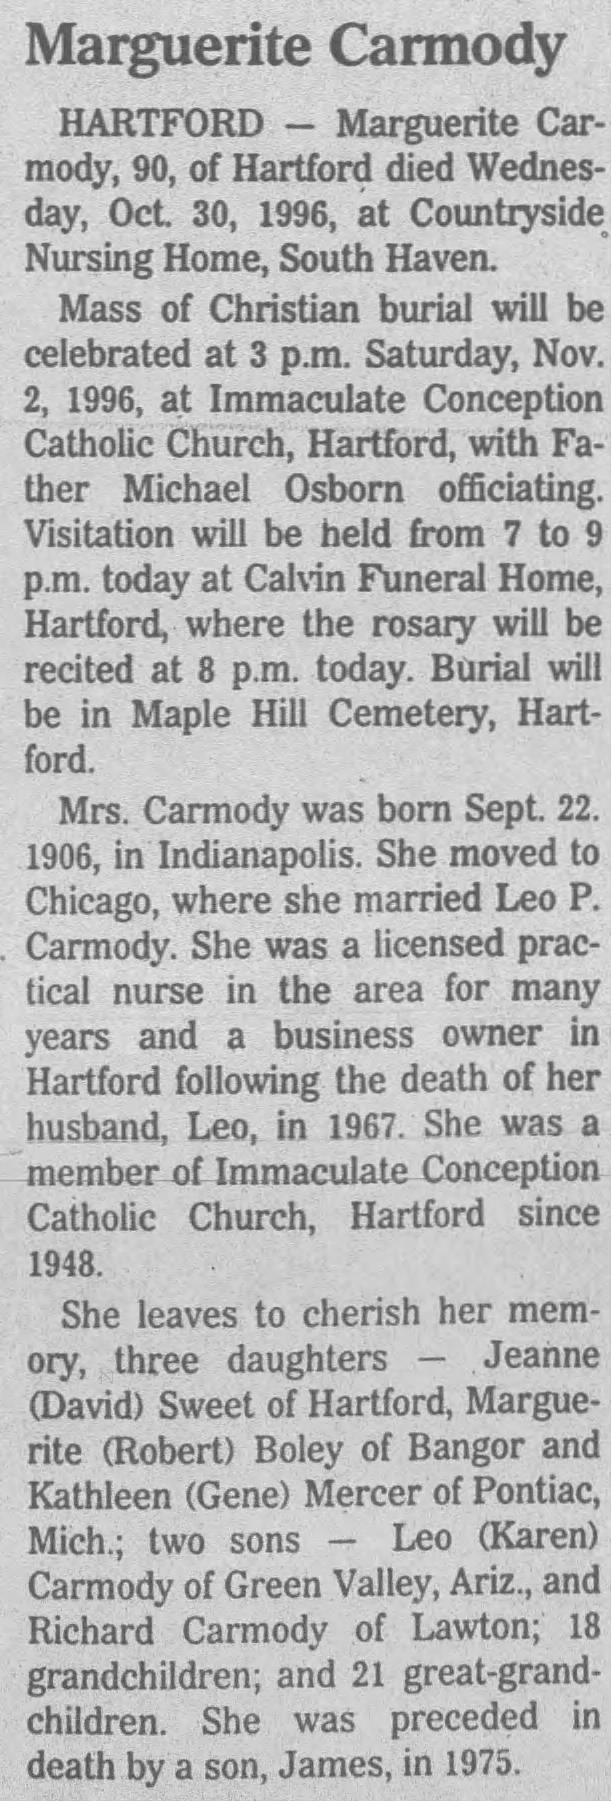 Marguerite Carmody obituary 1996